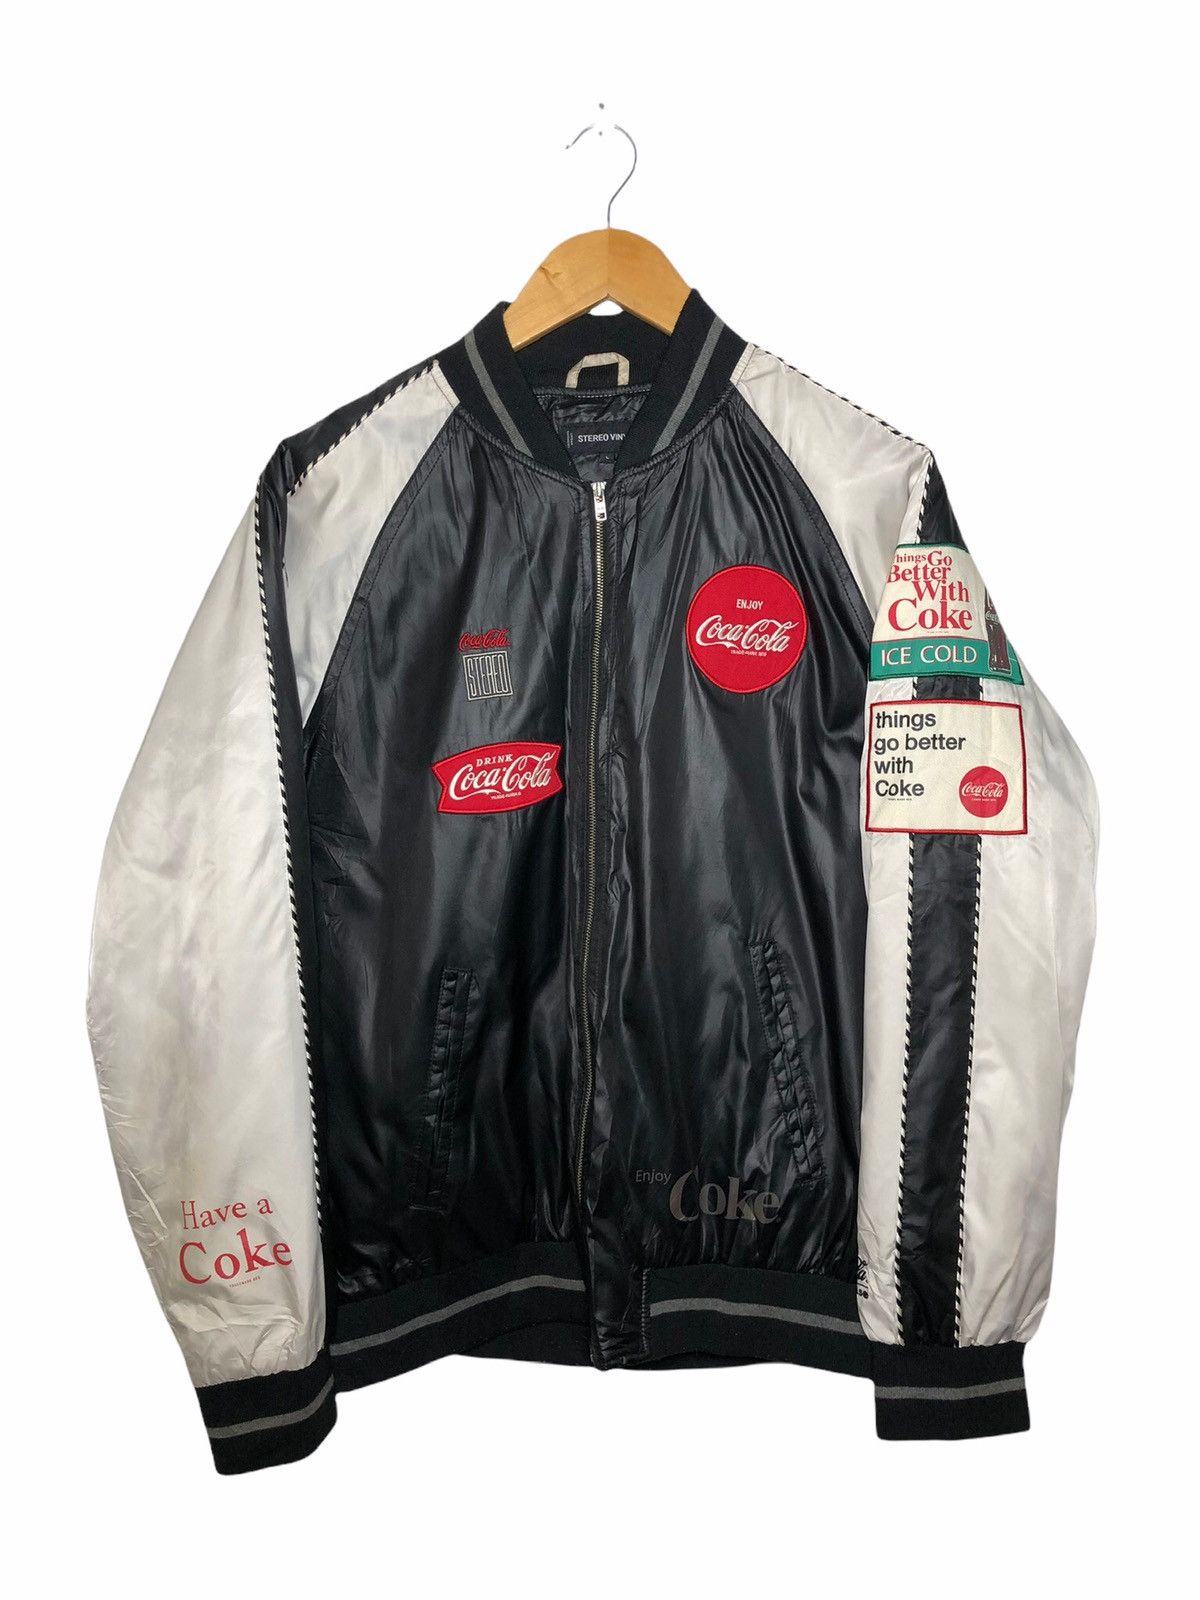 Coca Cola Japanese Brand Sukajan Coca cola Stereo Vinyls jacket | Grailed